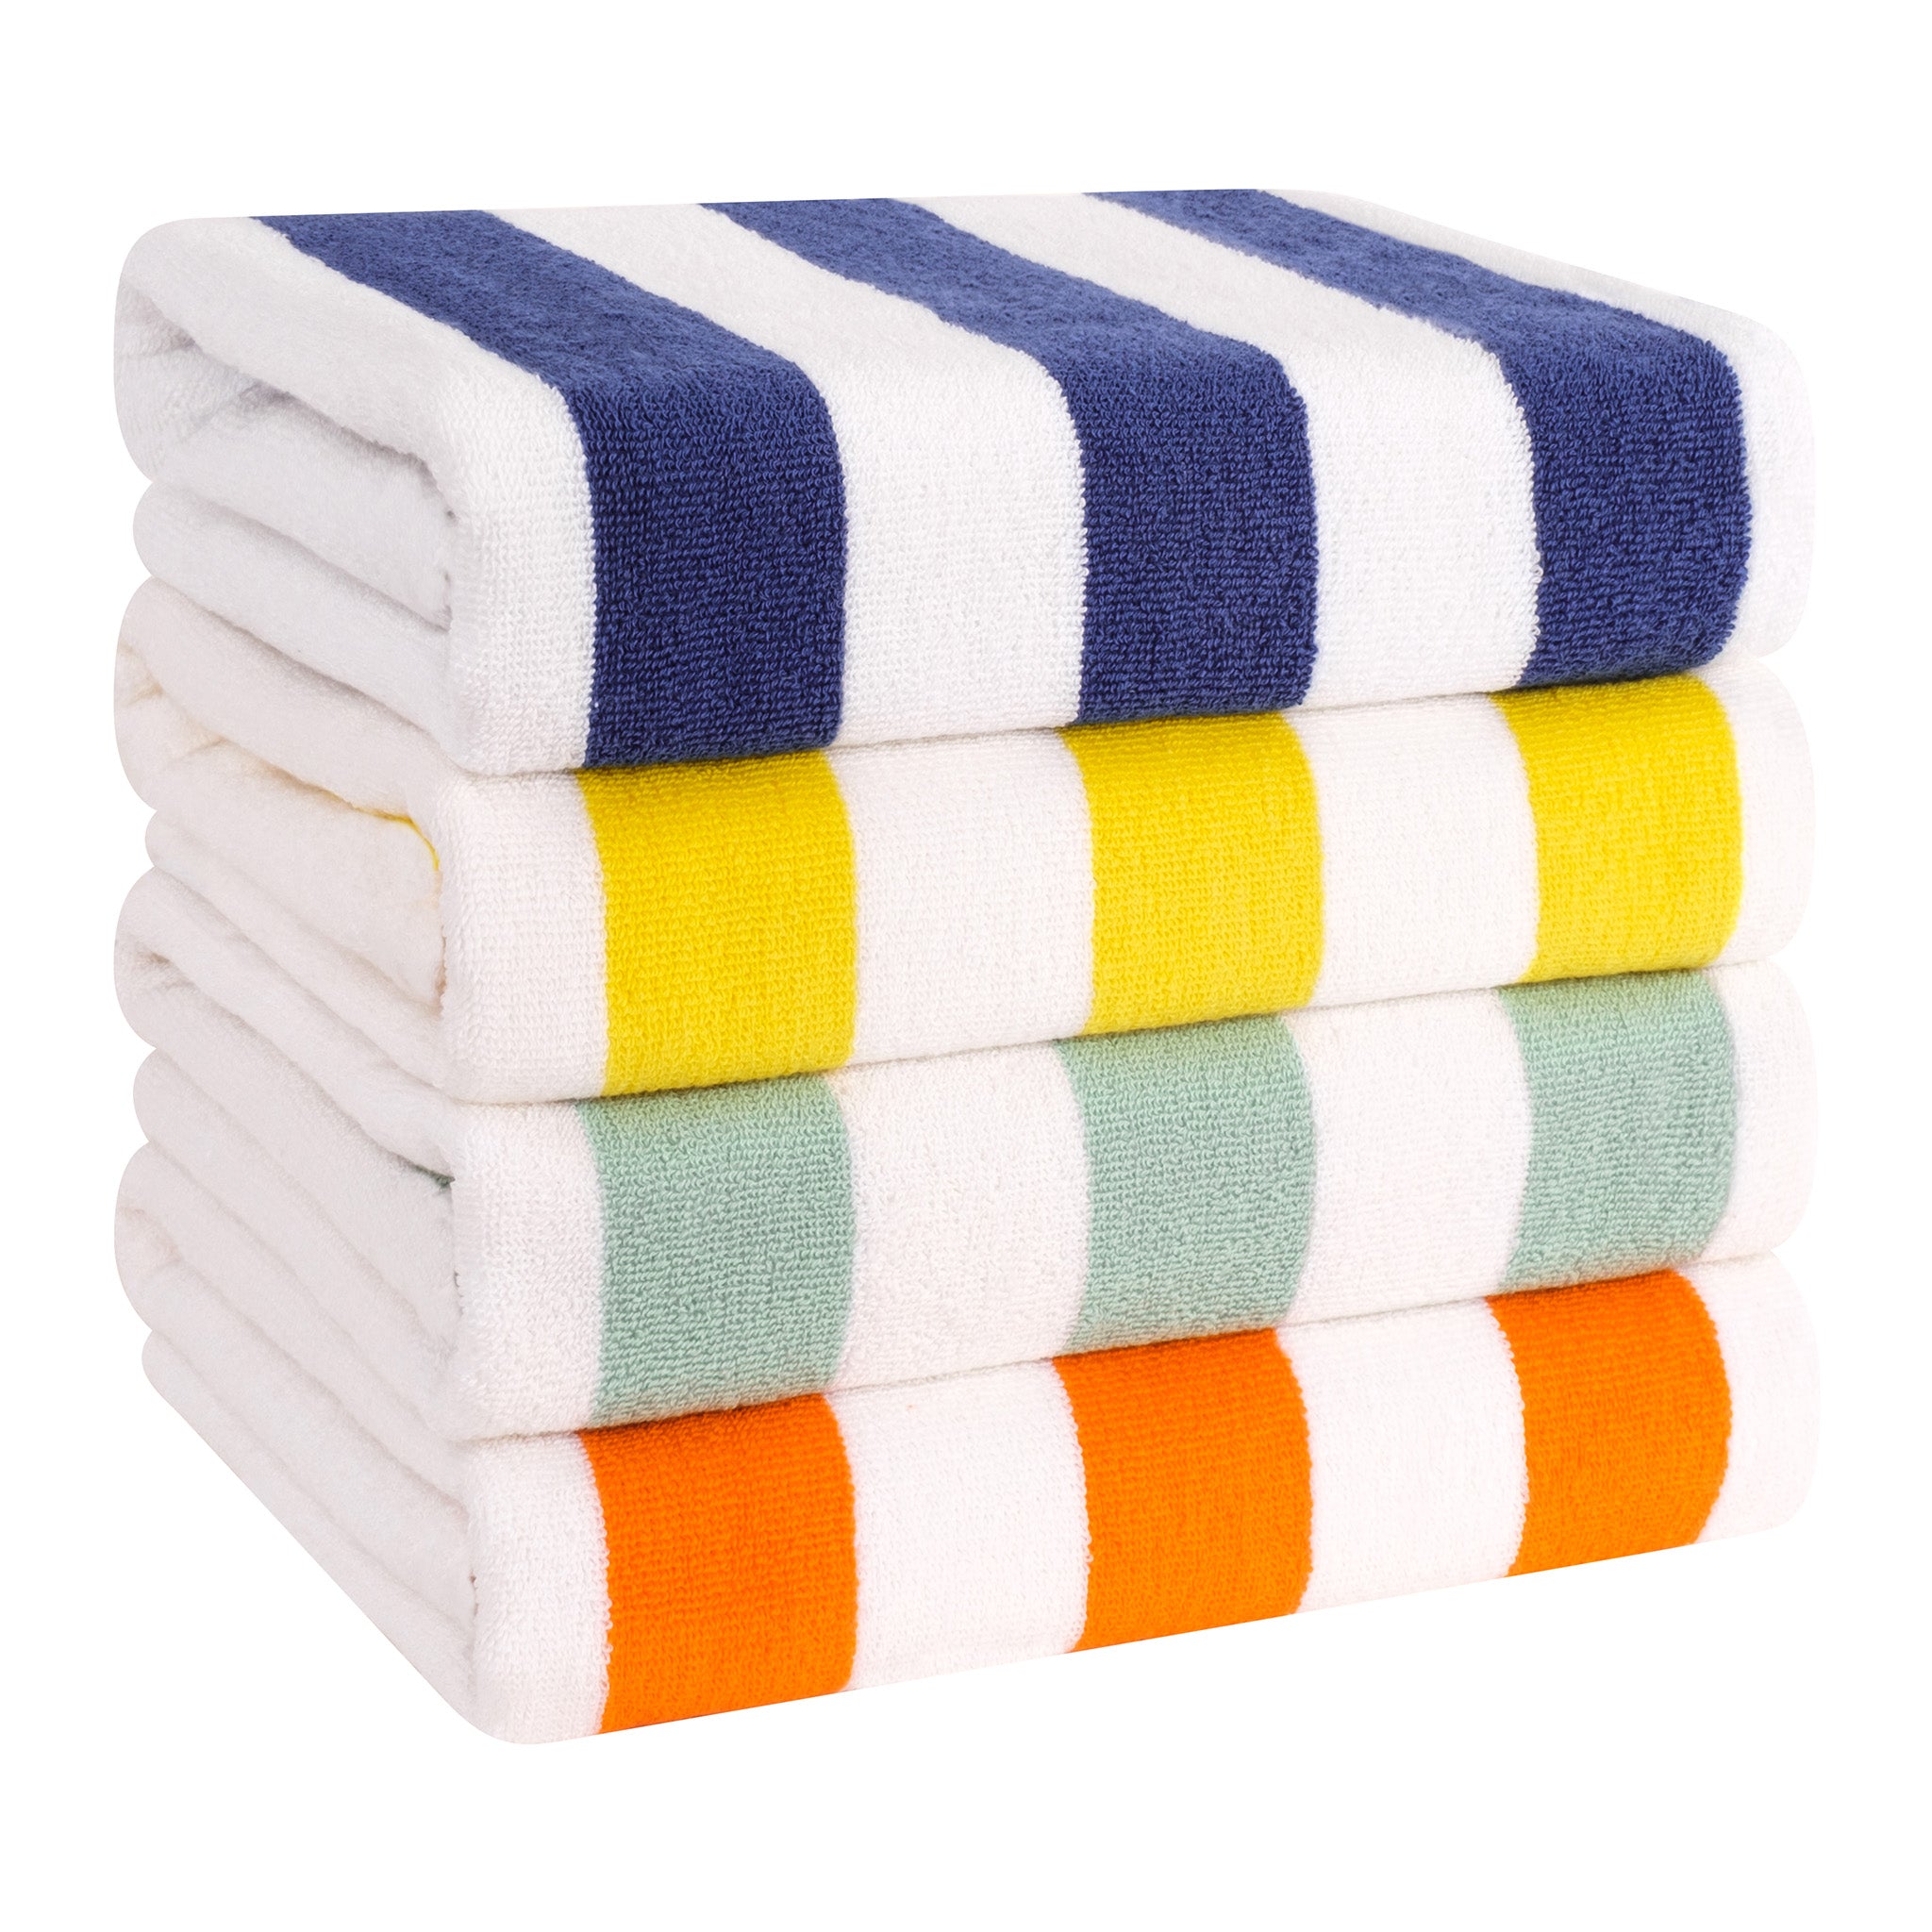 Cotton / Linen Striped Turkish Towel